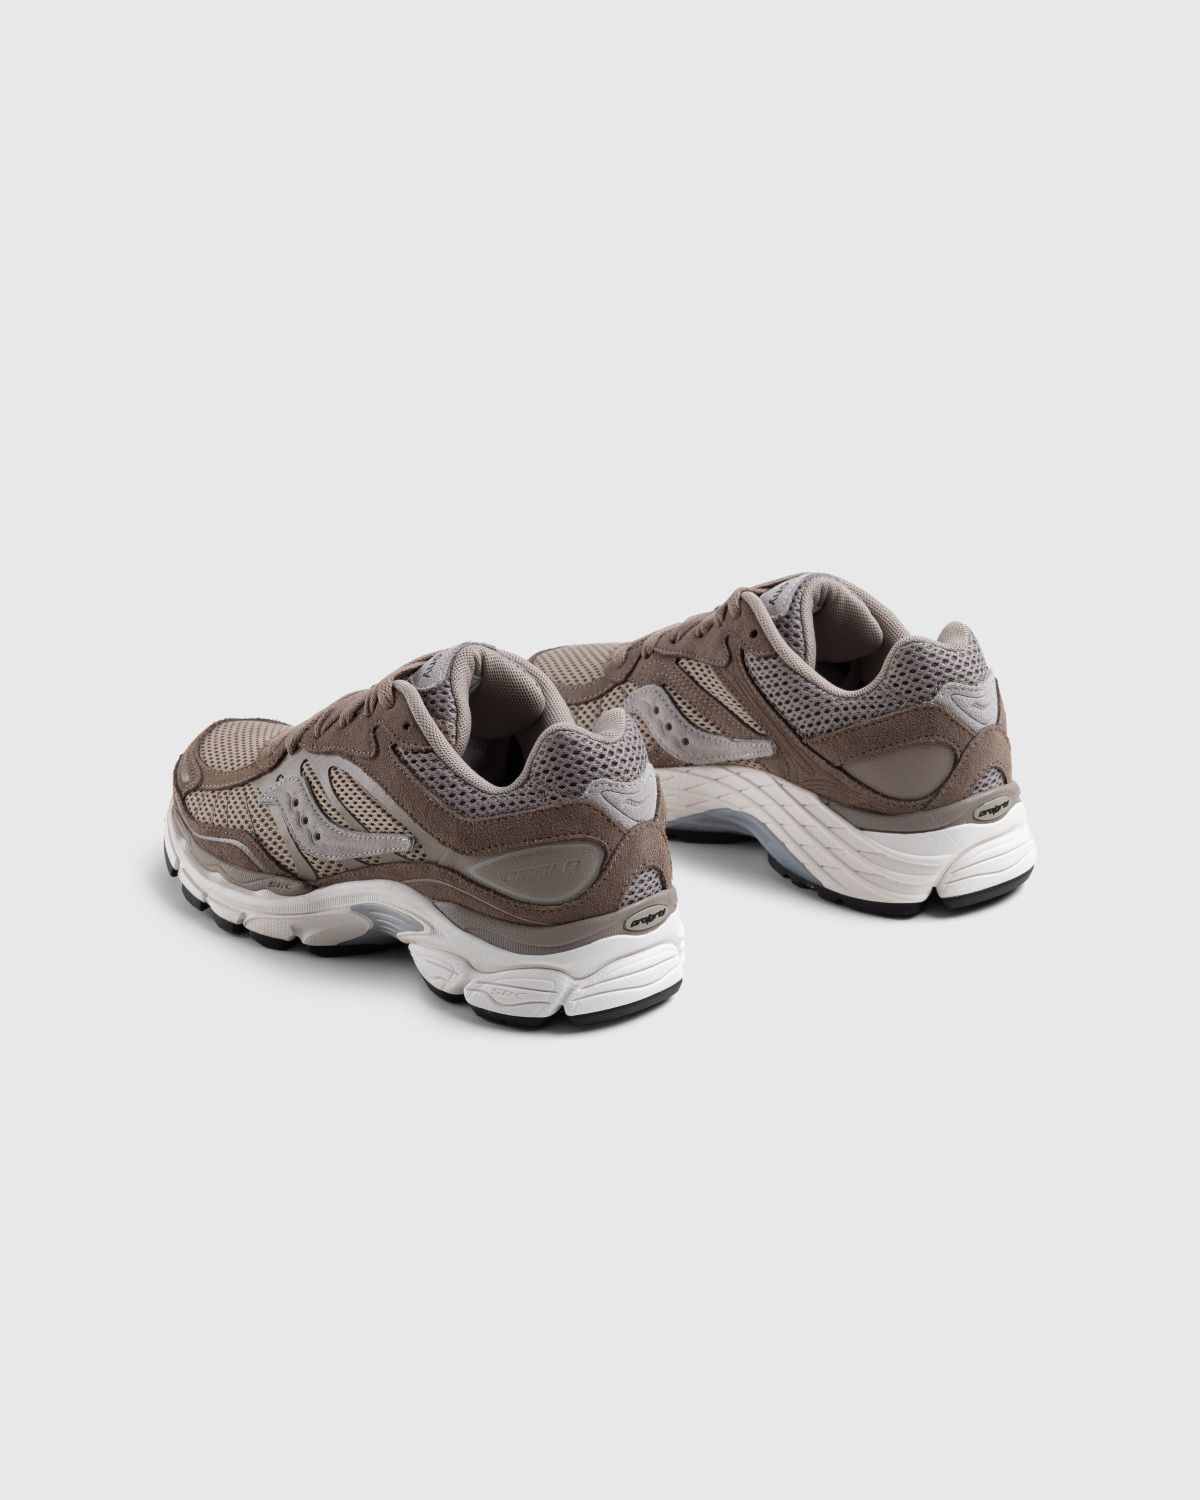 Saucony – ProGrid Omni 9 Premium Greige - Low Top Sneakers - Grey - Image 4